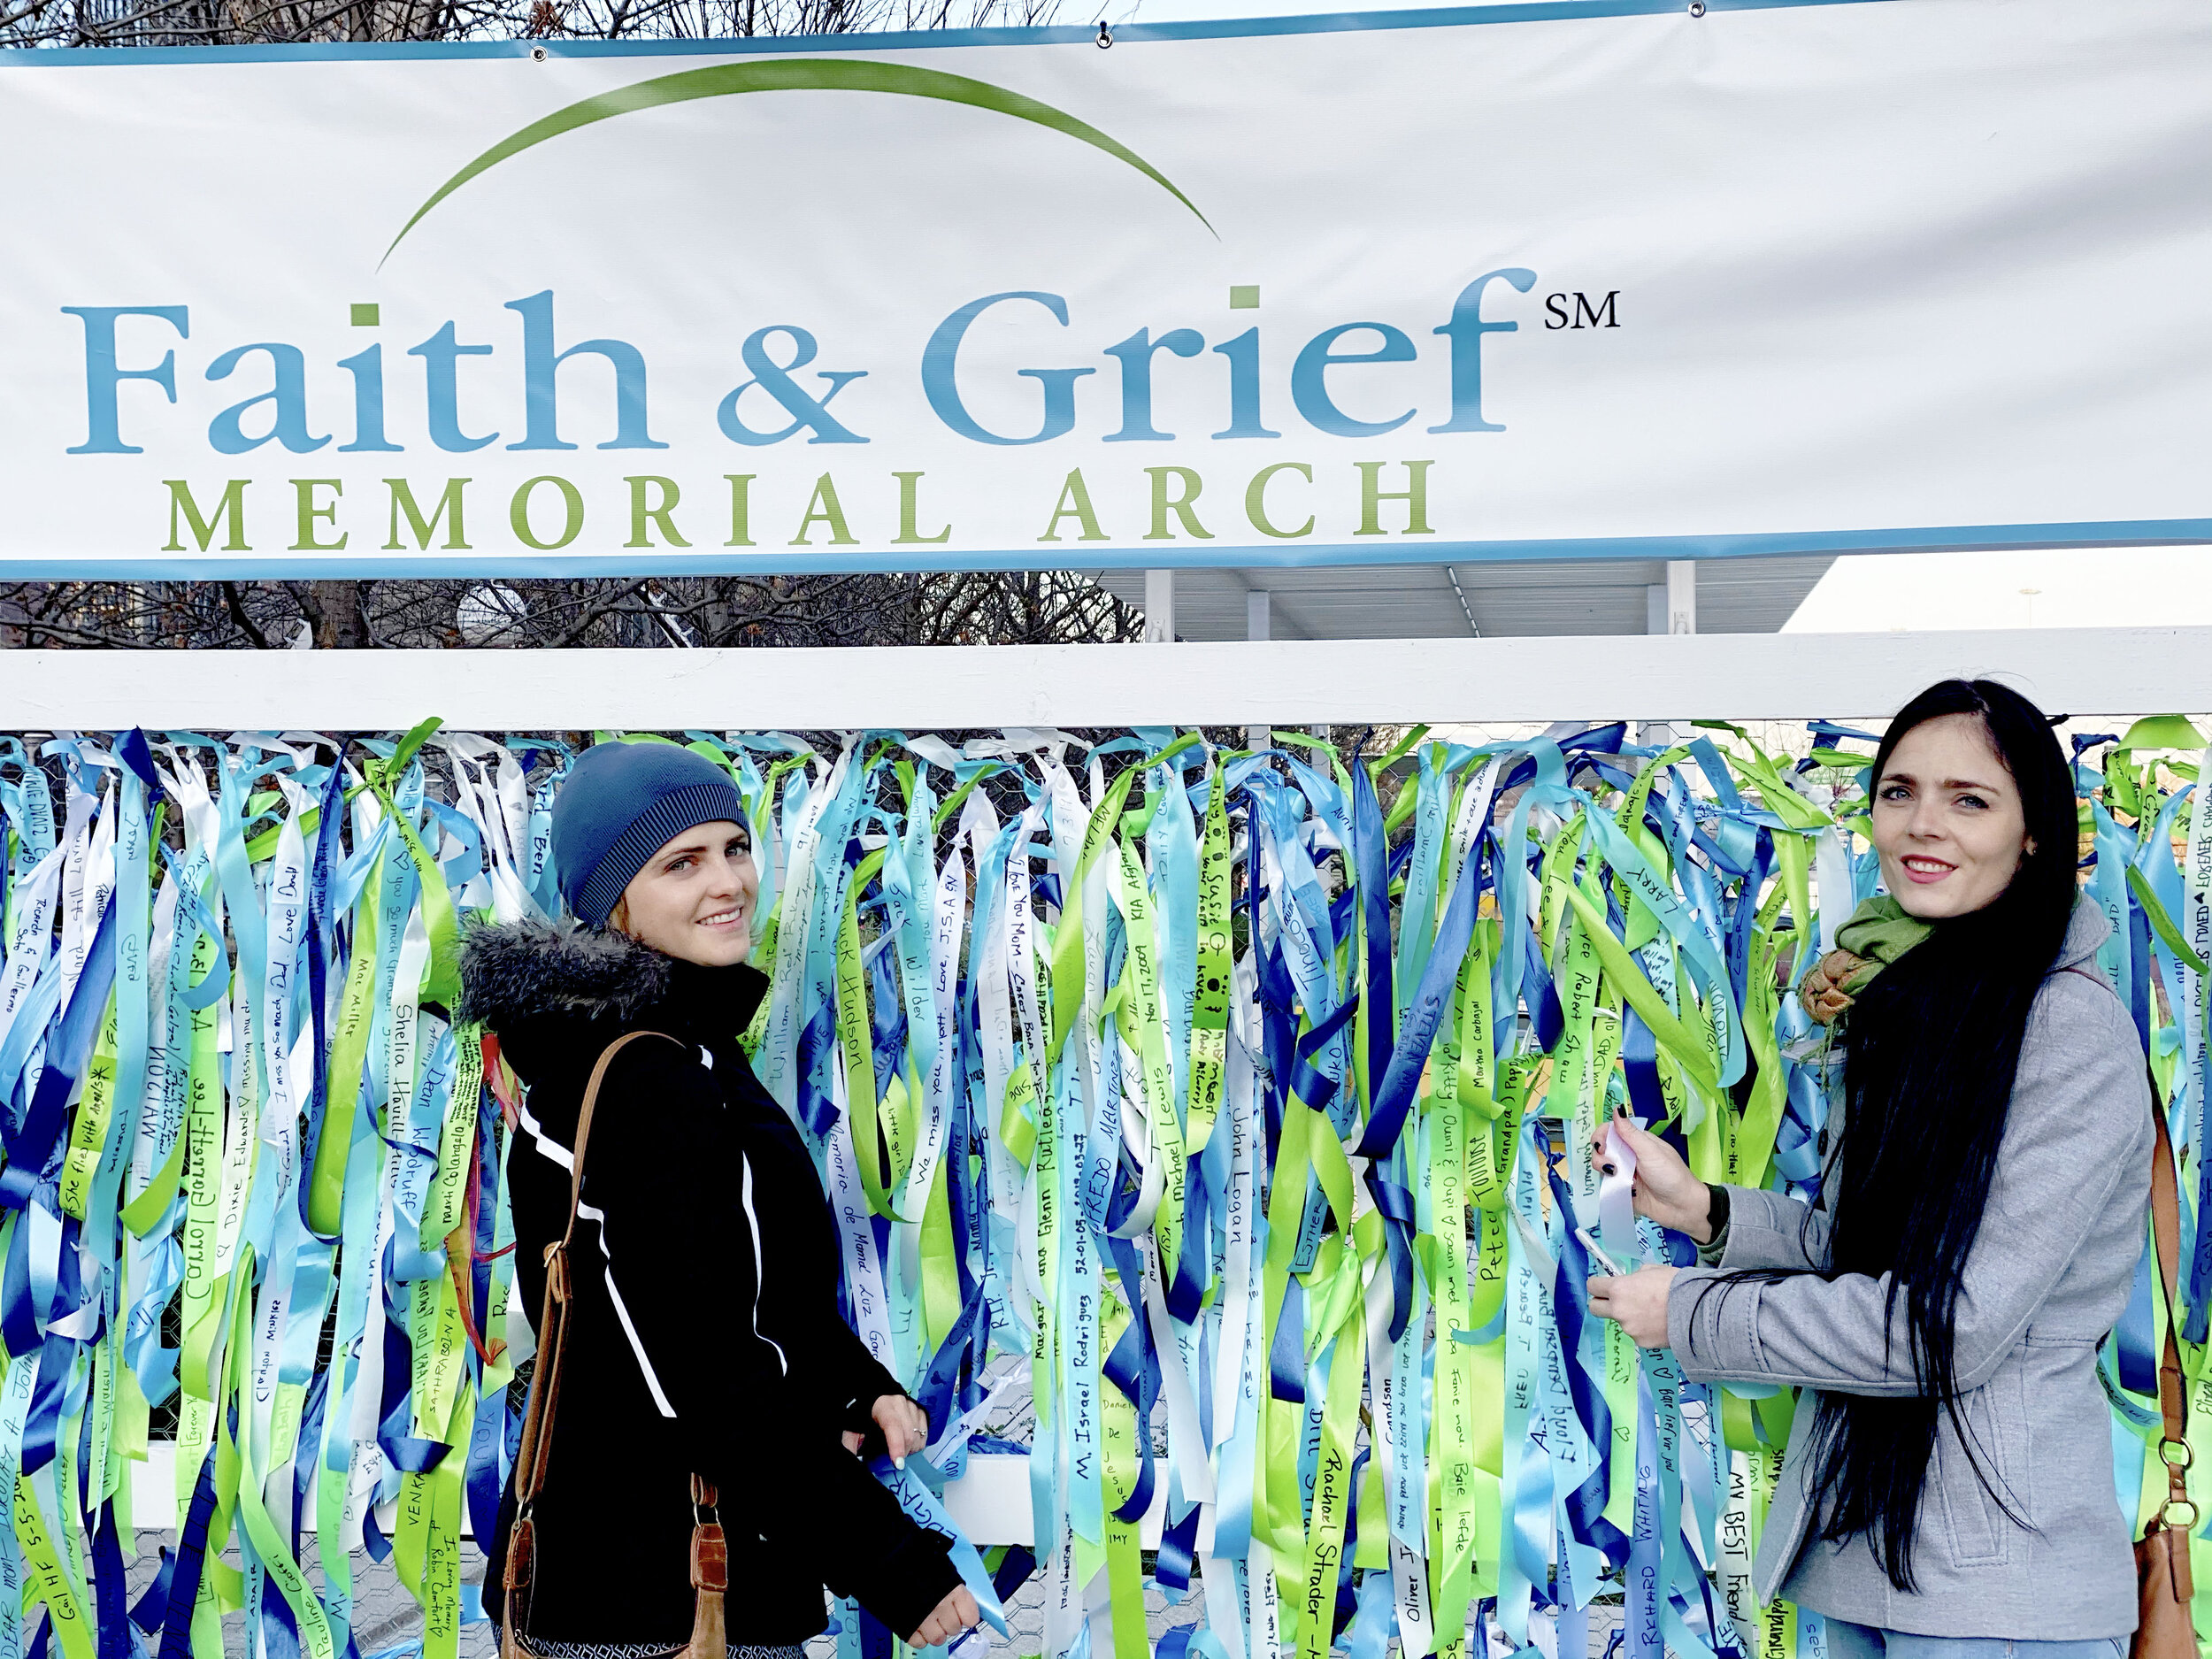 Faith & Grief Memorial Arch two women visit